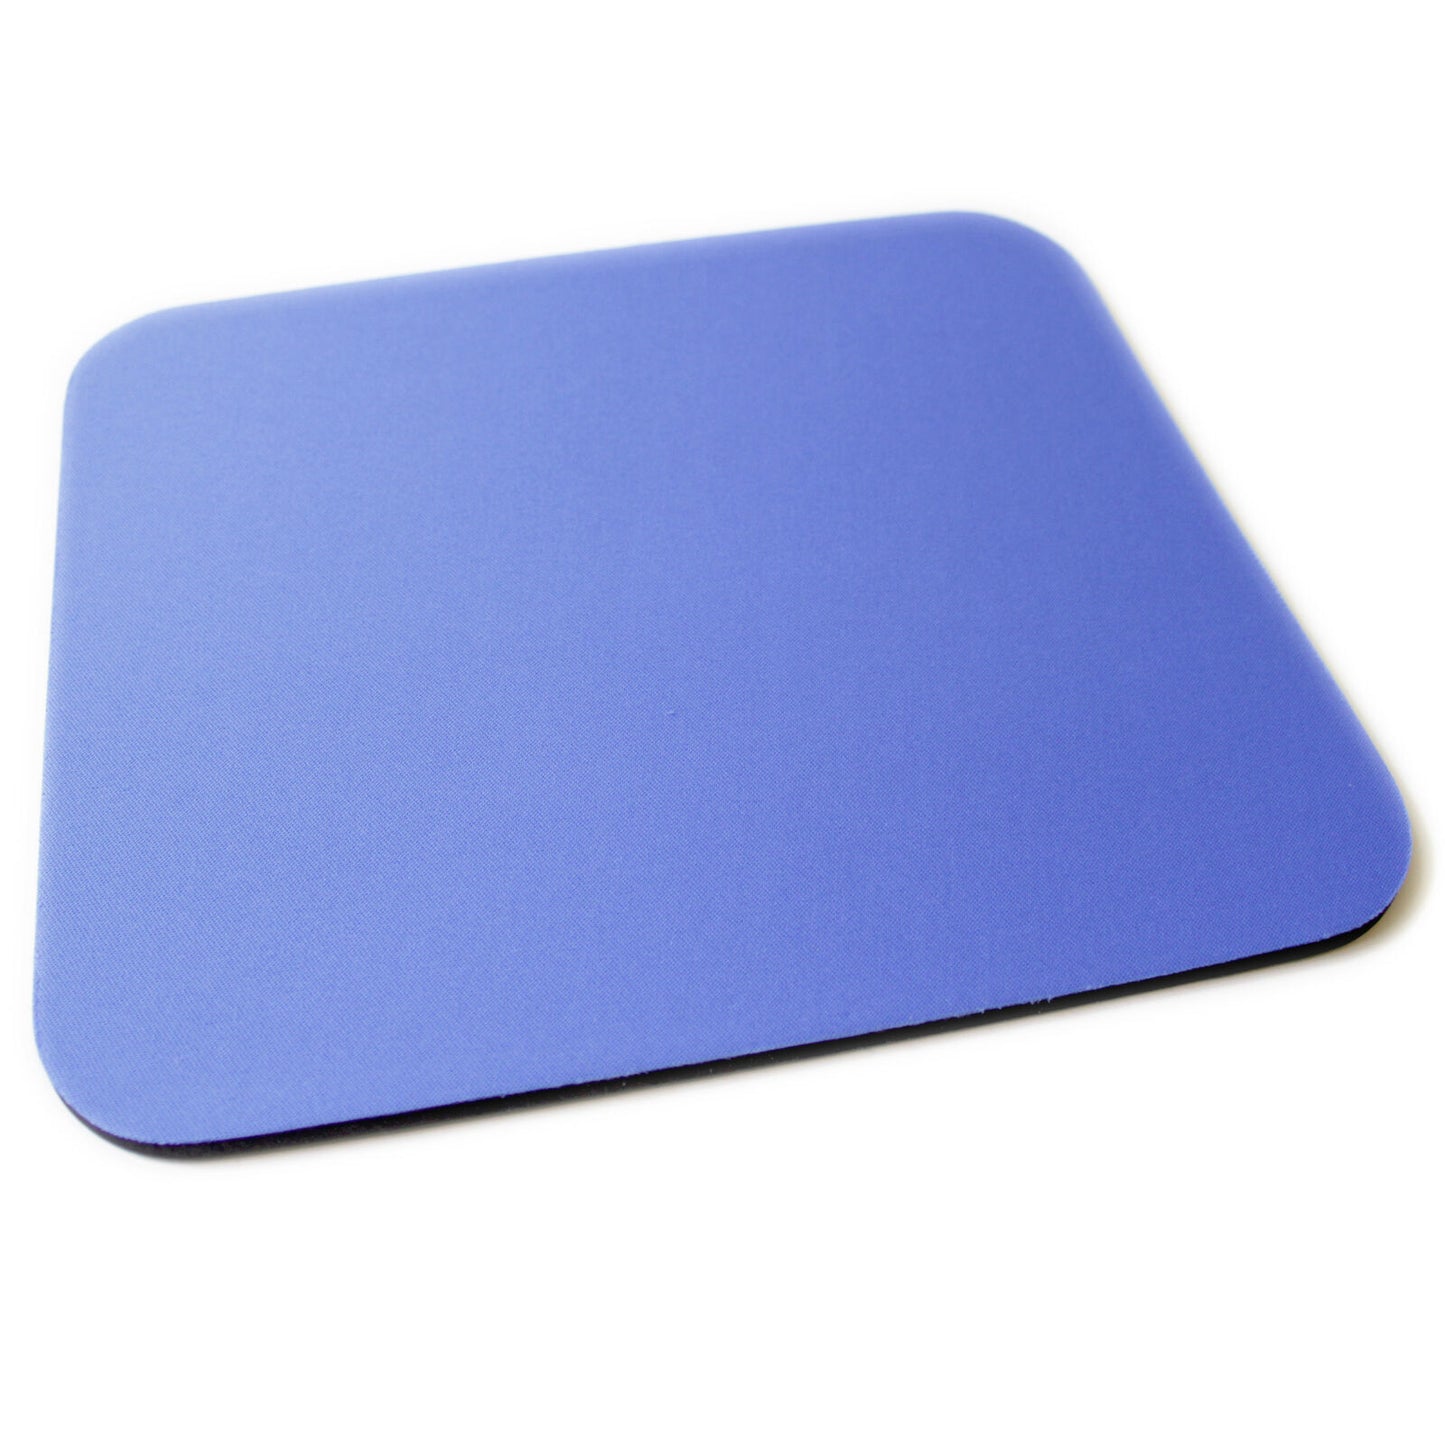 Mauspad Blau 21,7 x 24,8 cm / Mousepad Emtec / Farbig / Rutschfest / Mausmatte